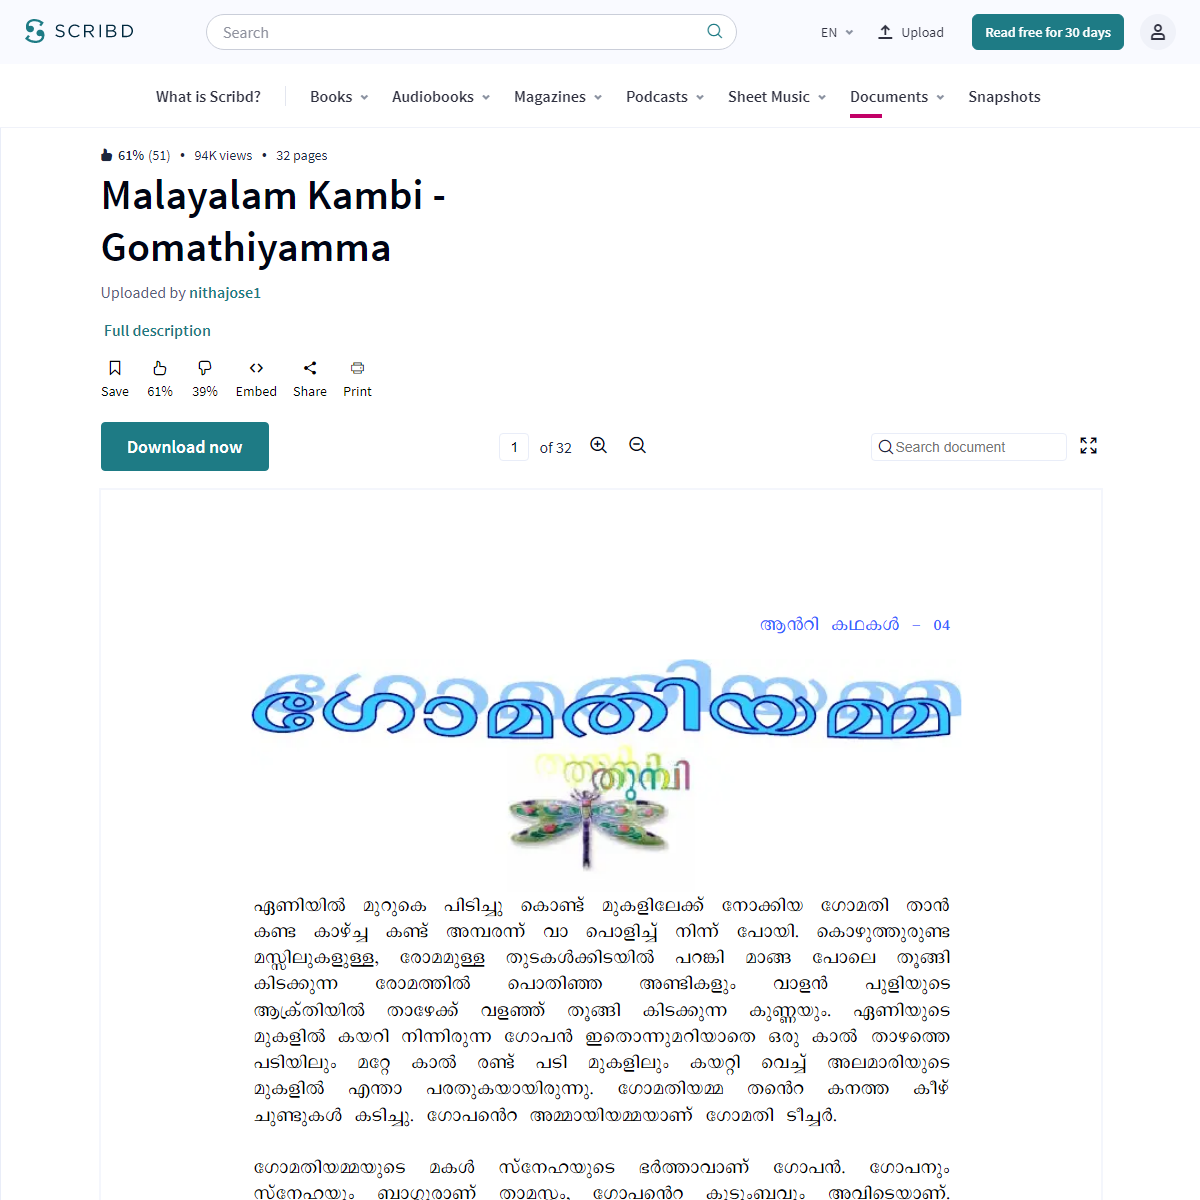 A complete backup of https://www.scribd.com/doc/36743781/Malayalam-Kambi-Gomathiyamma